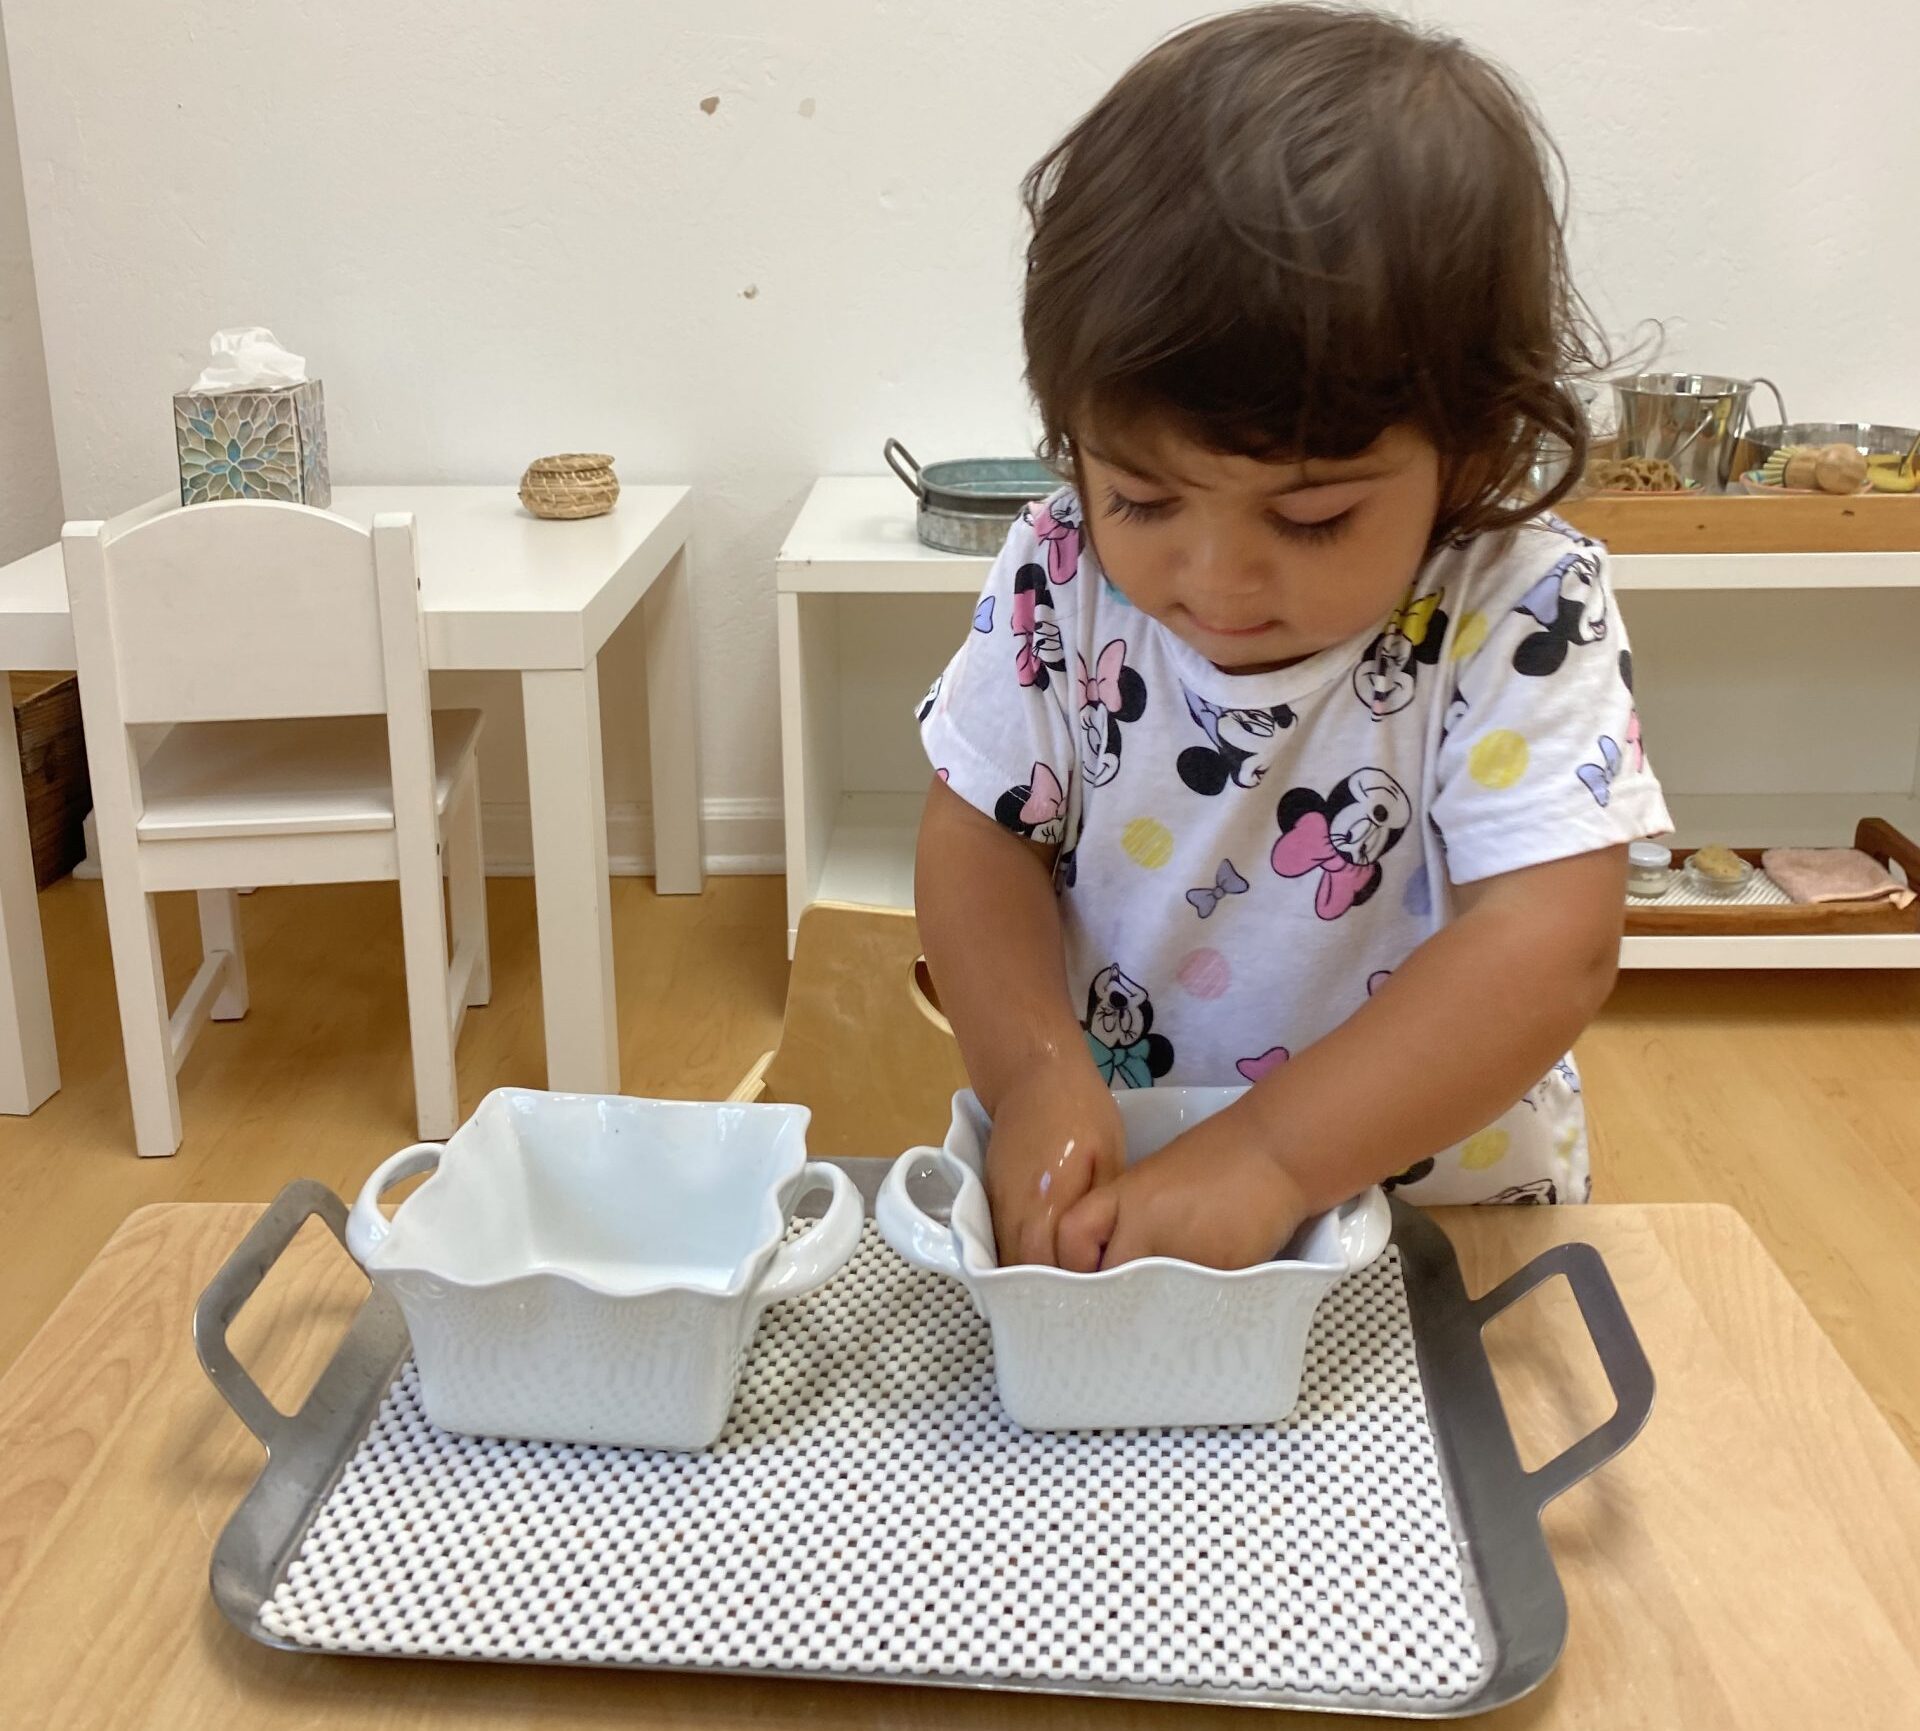 Toddler washing hands Preschool